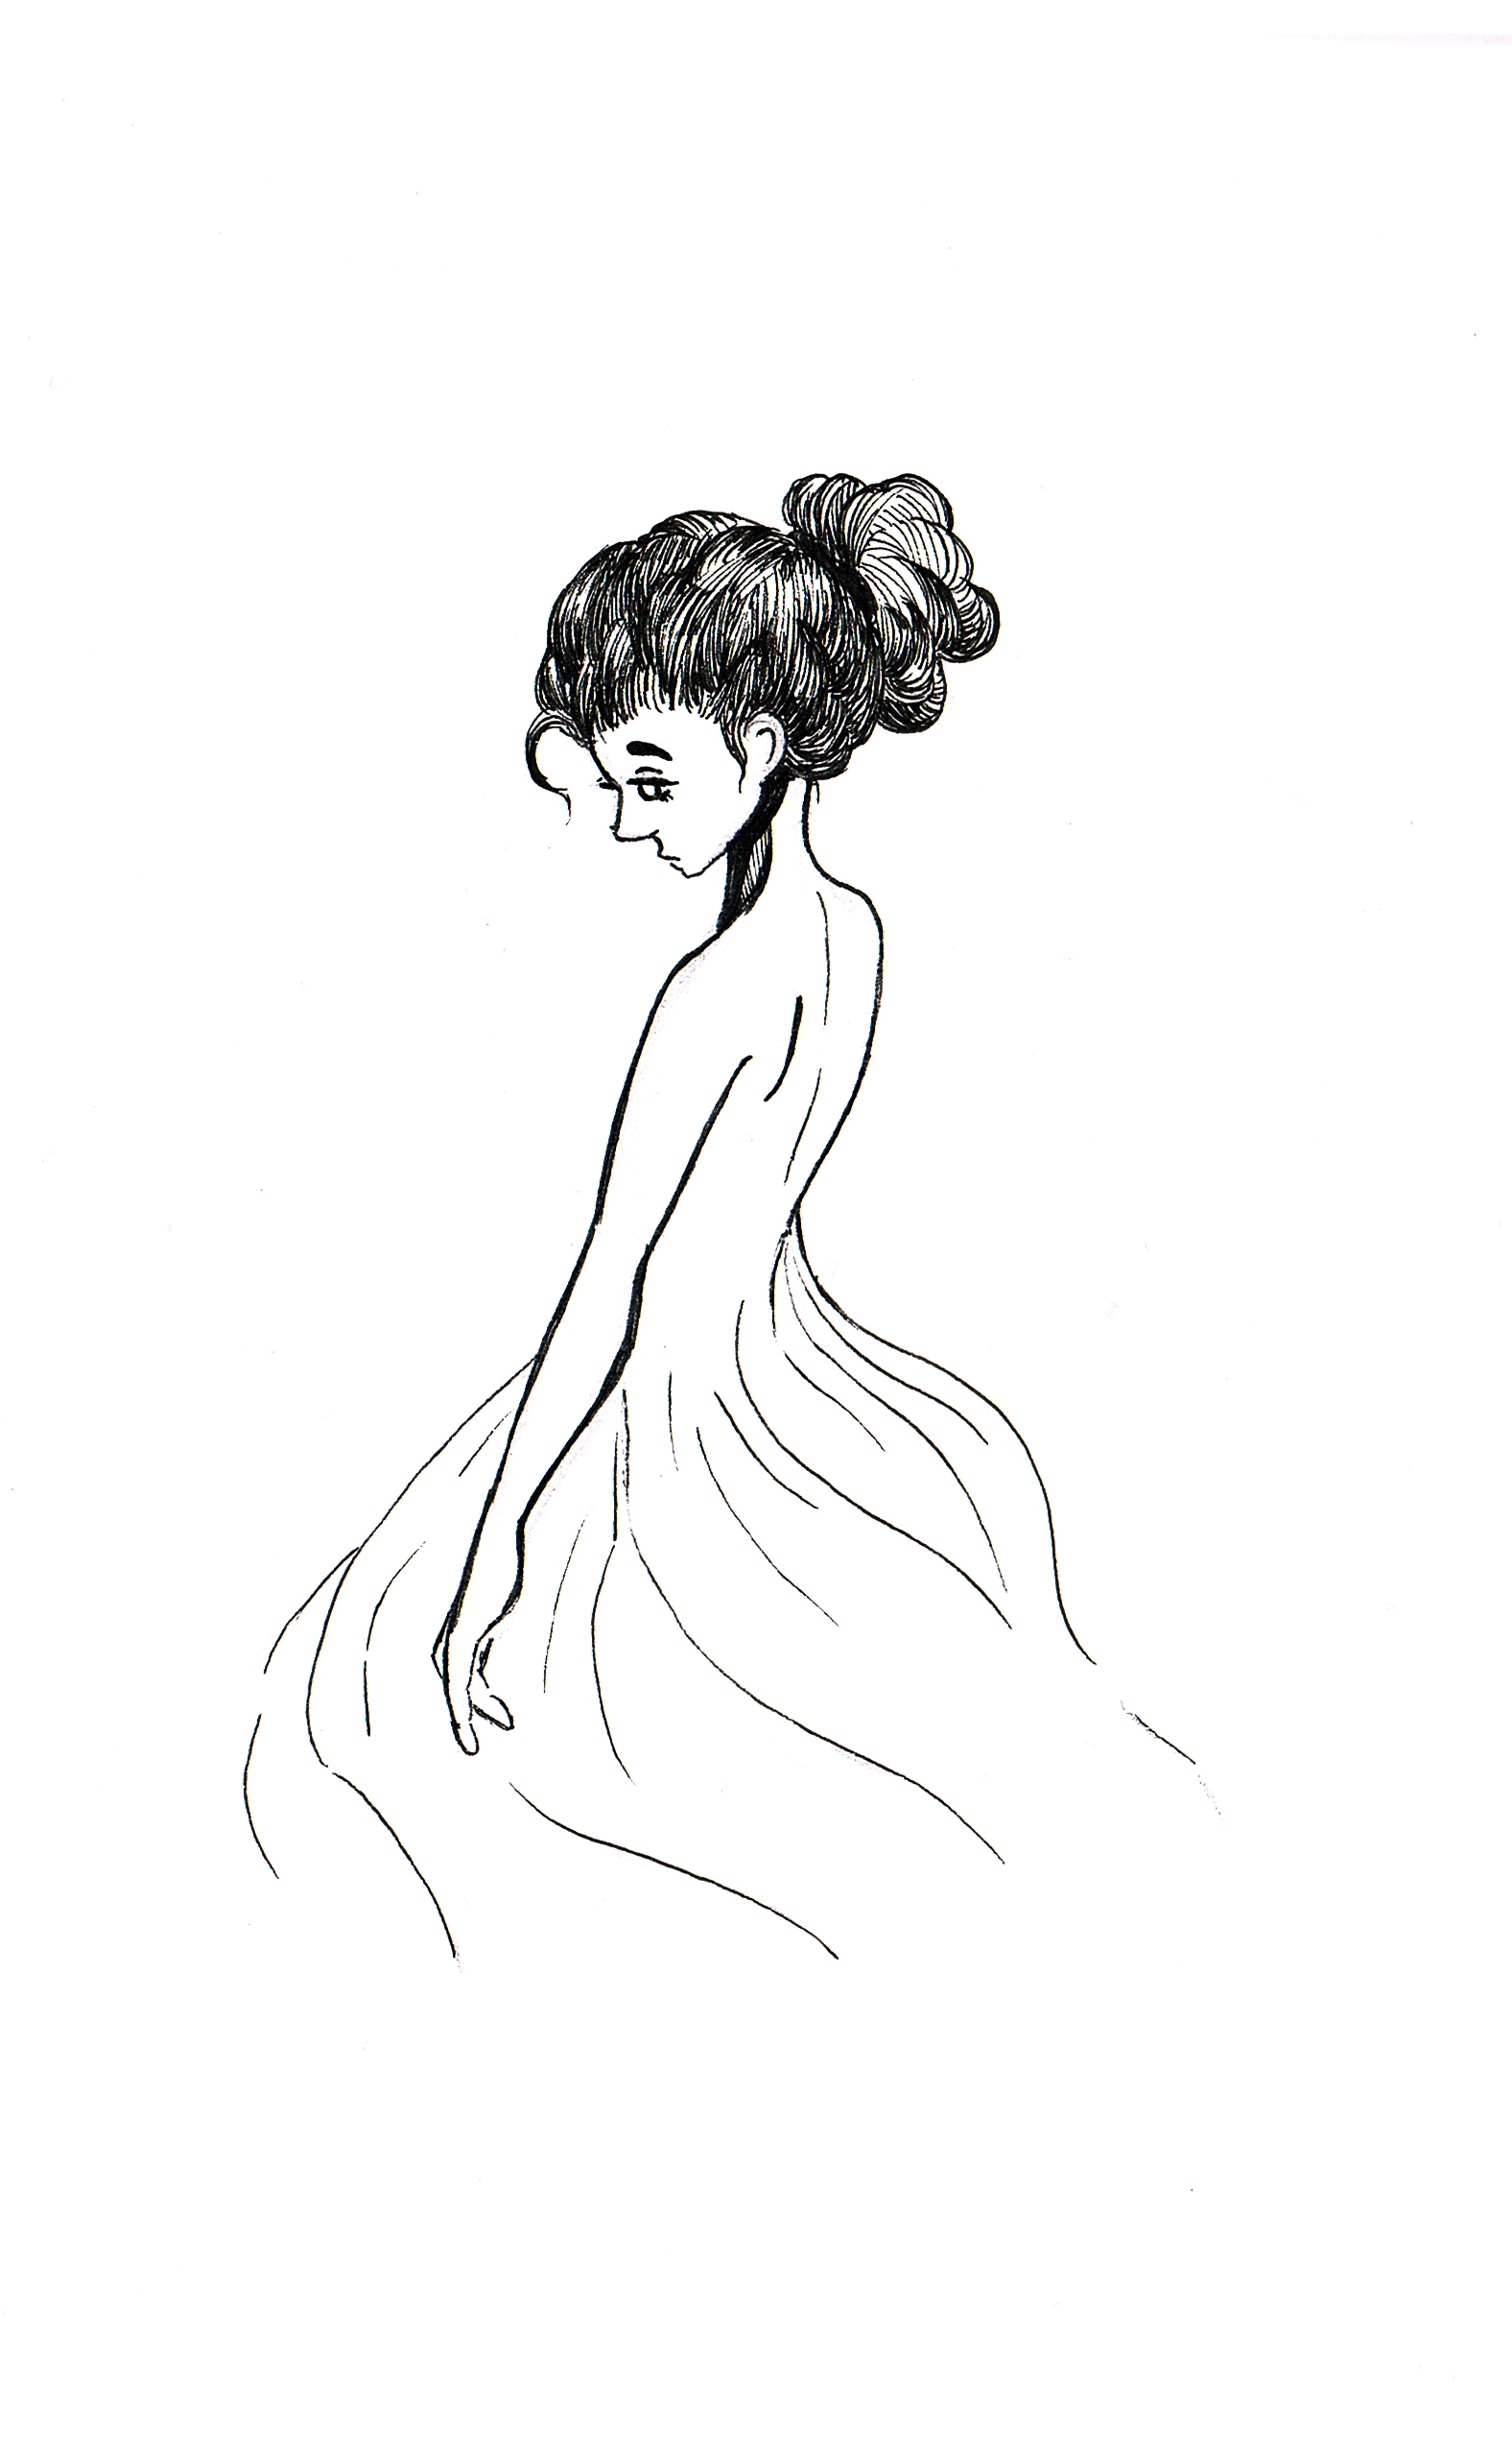 Daily Sketch - Girl